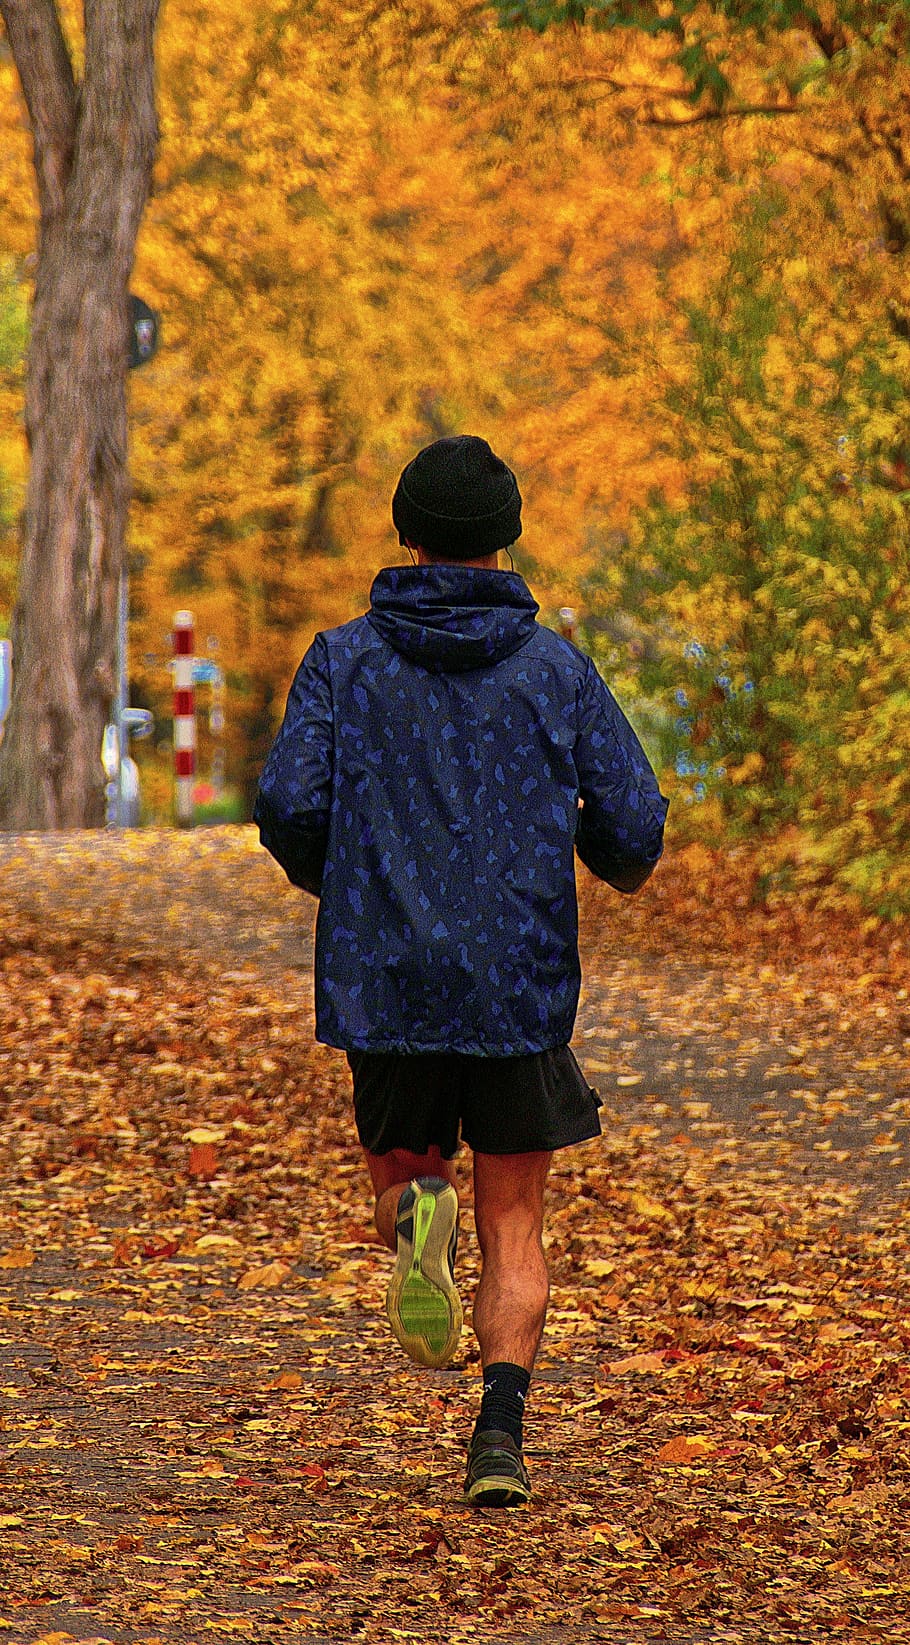 pelari, musim gugur, taman, lari, pria, gerakan, joging, sporty, pagi, mewarnai daun